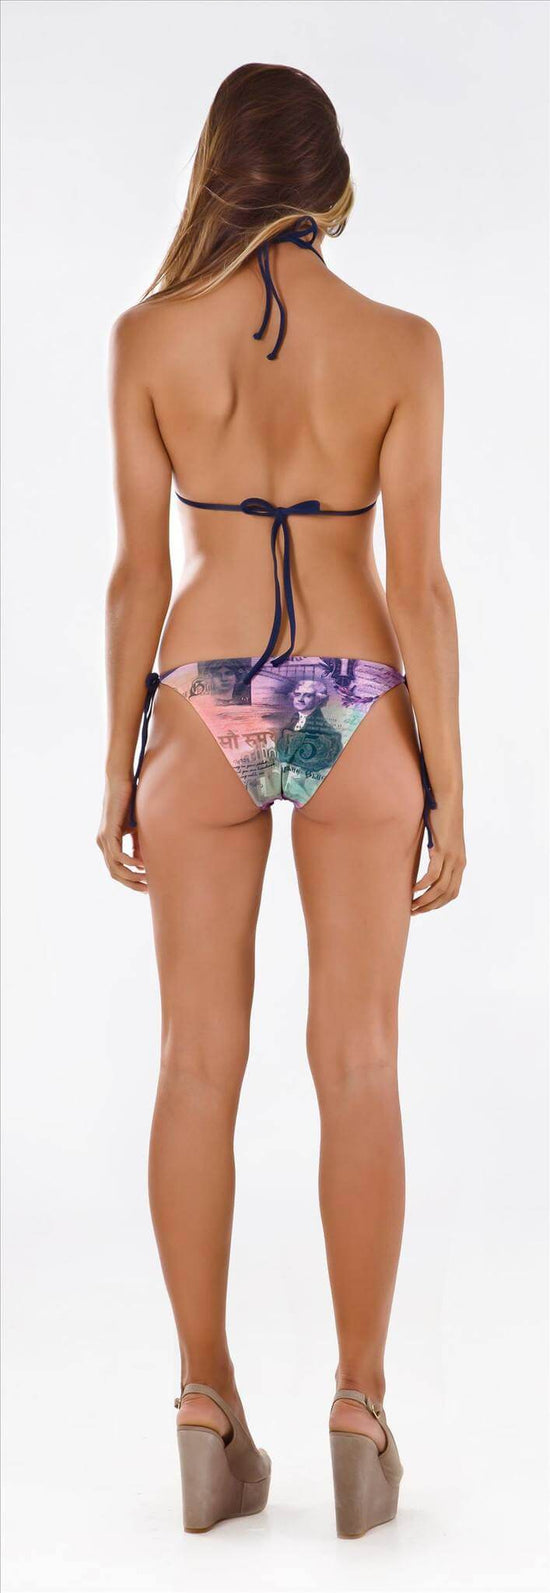 Thaikila Apparel & Accessories > Clothing > Swimwear Print / One Size Thaikila Money Reversible Triangle Top and Side Tie Brazilian Bottom Bikini Swimwear Set